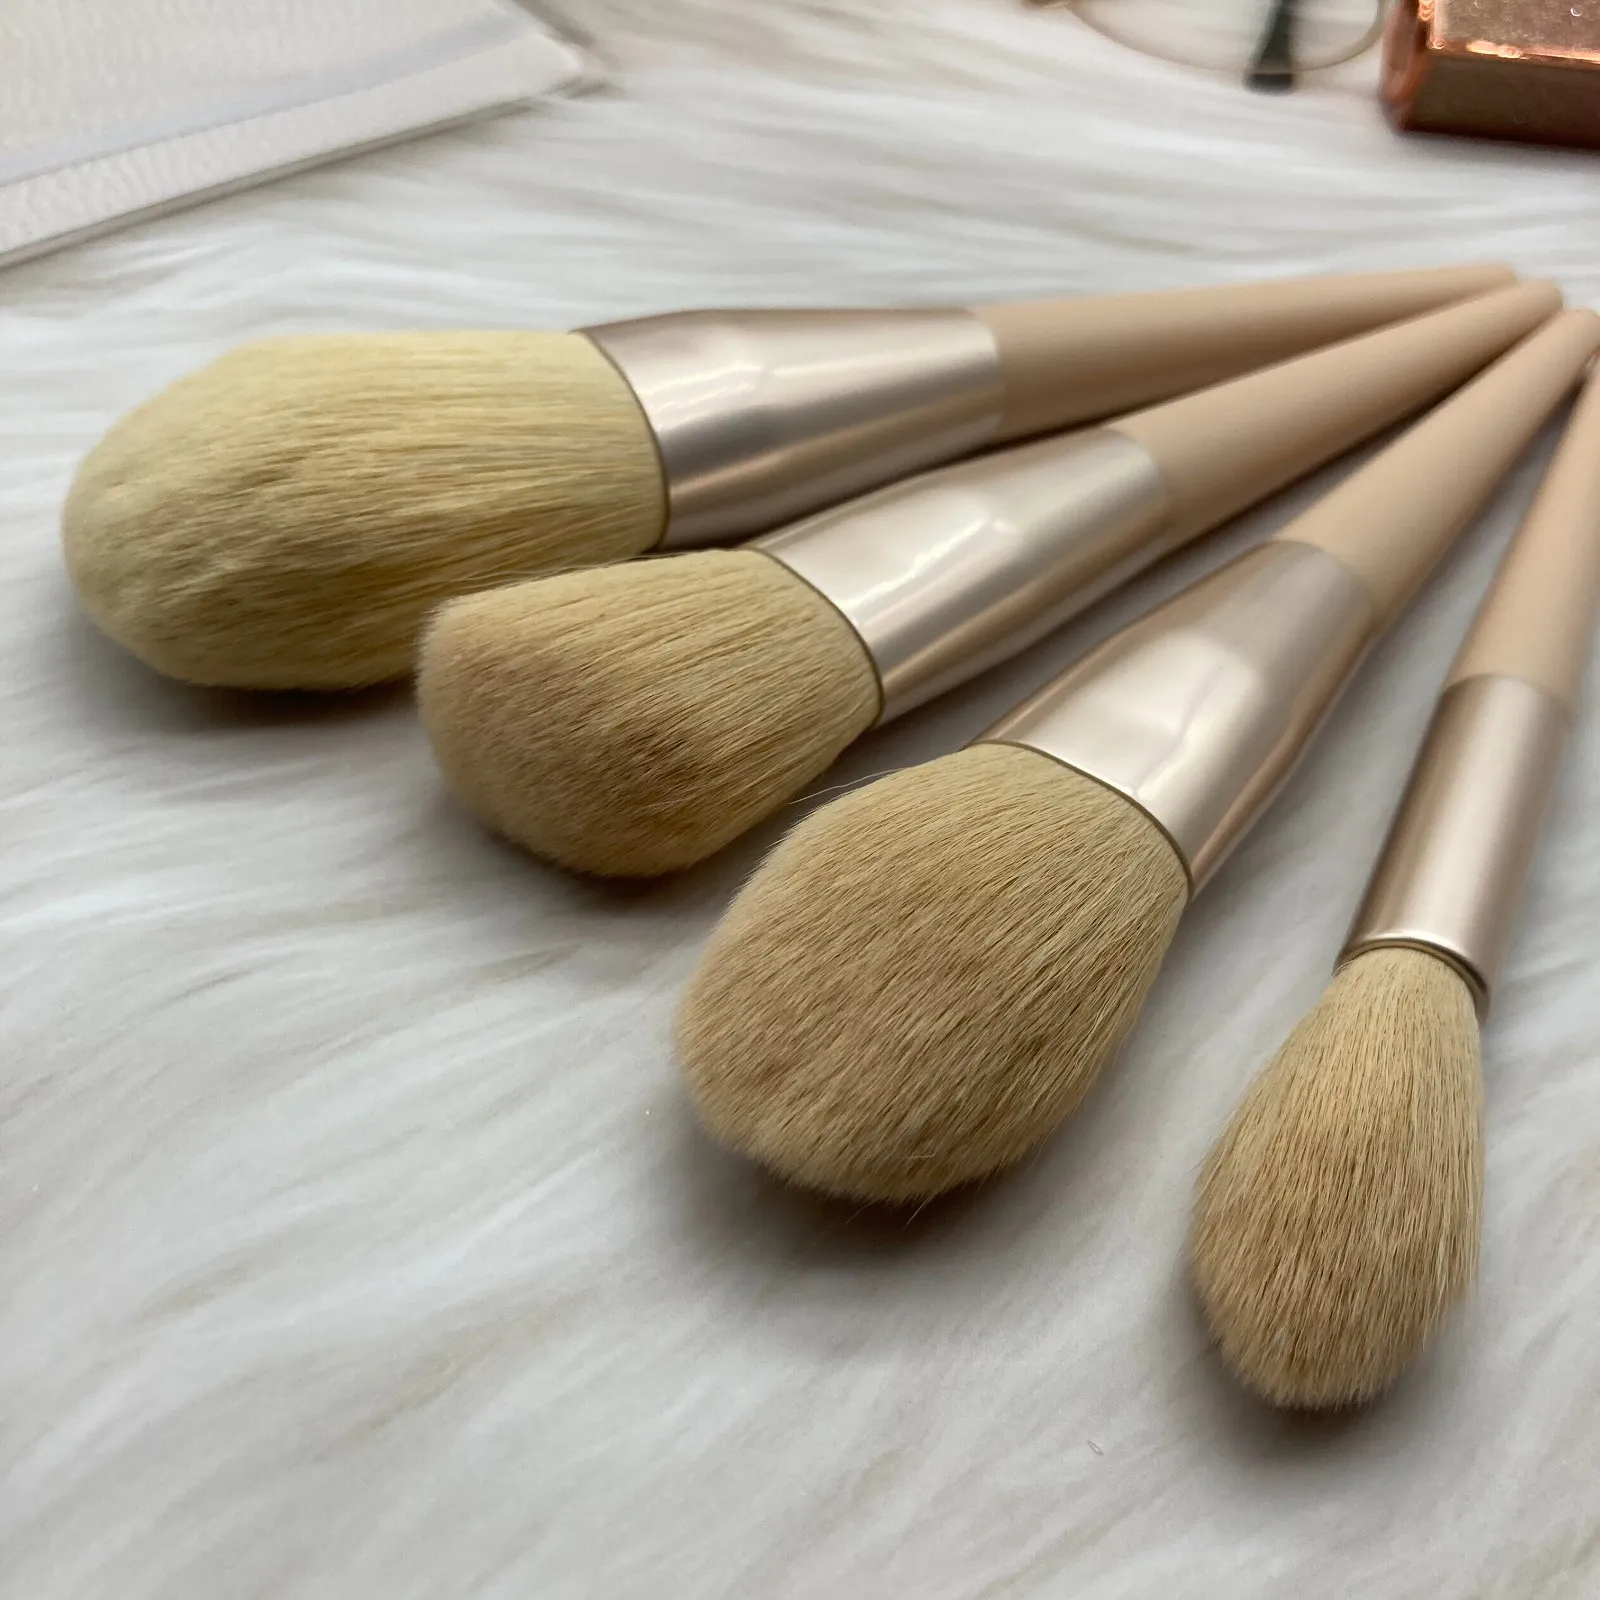 Suprabeauty Latest eye makeup brush kit Supply for beauty